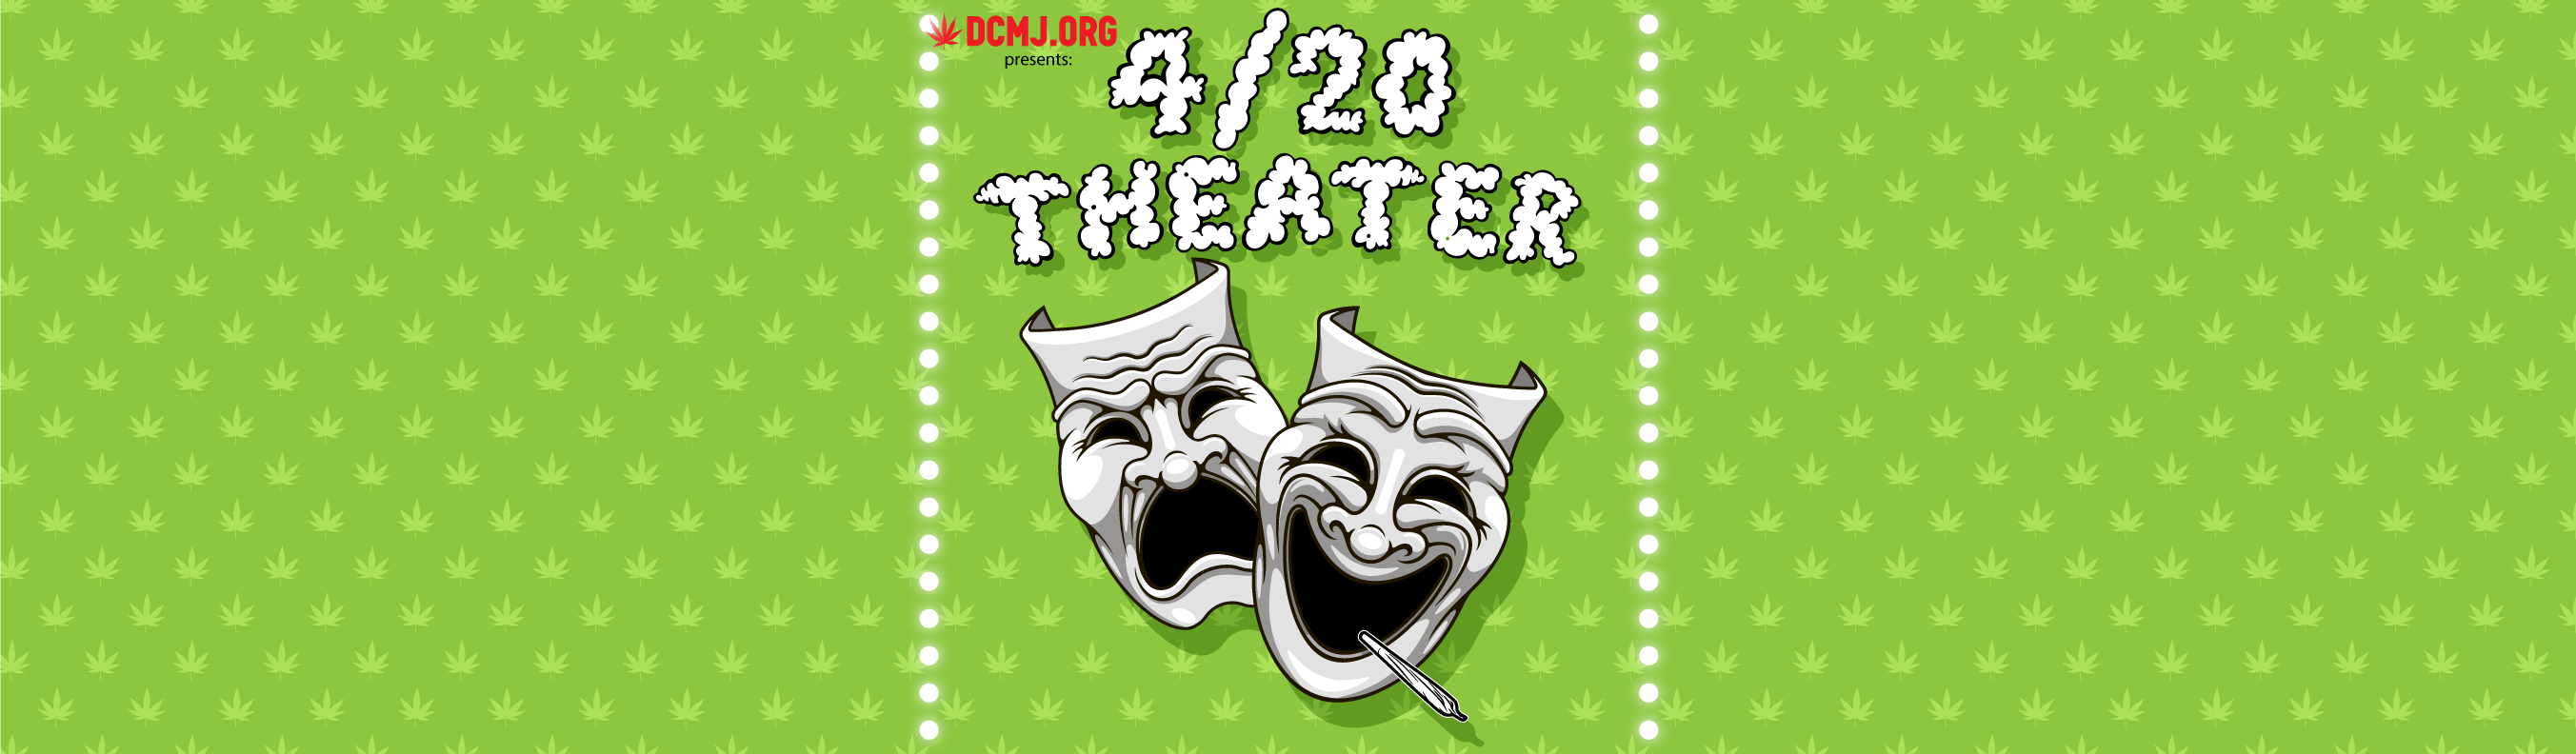 DCMJ presents 4/20 Theater